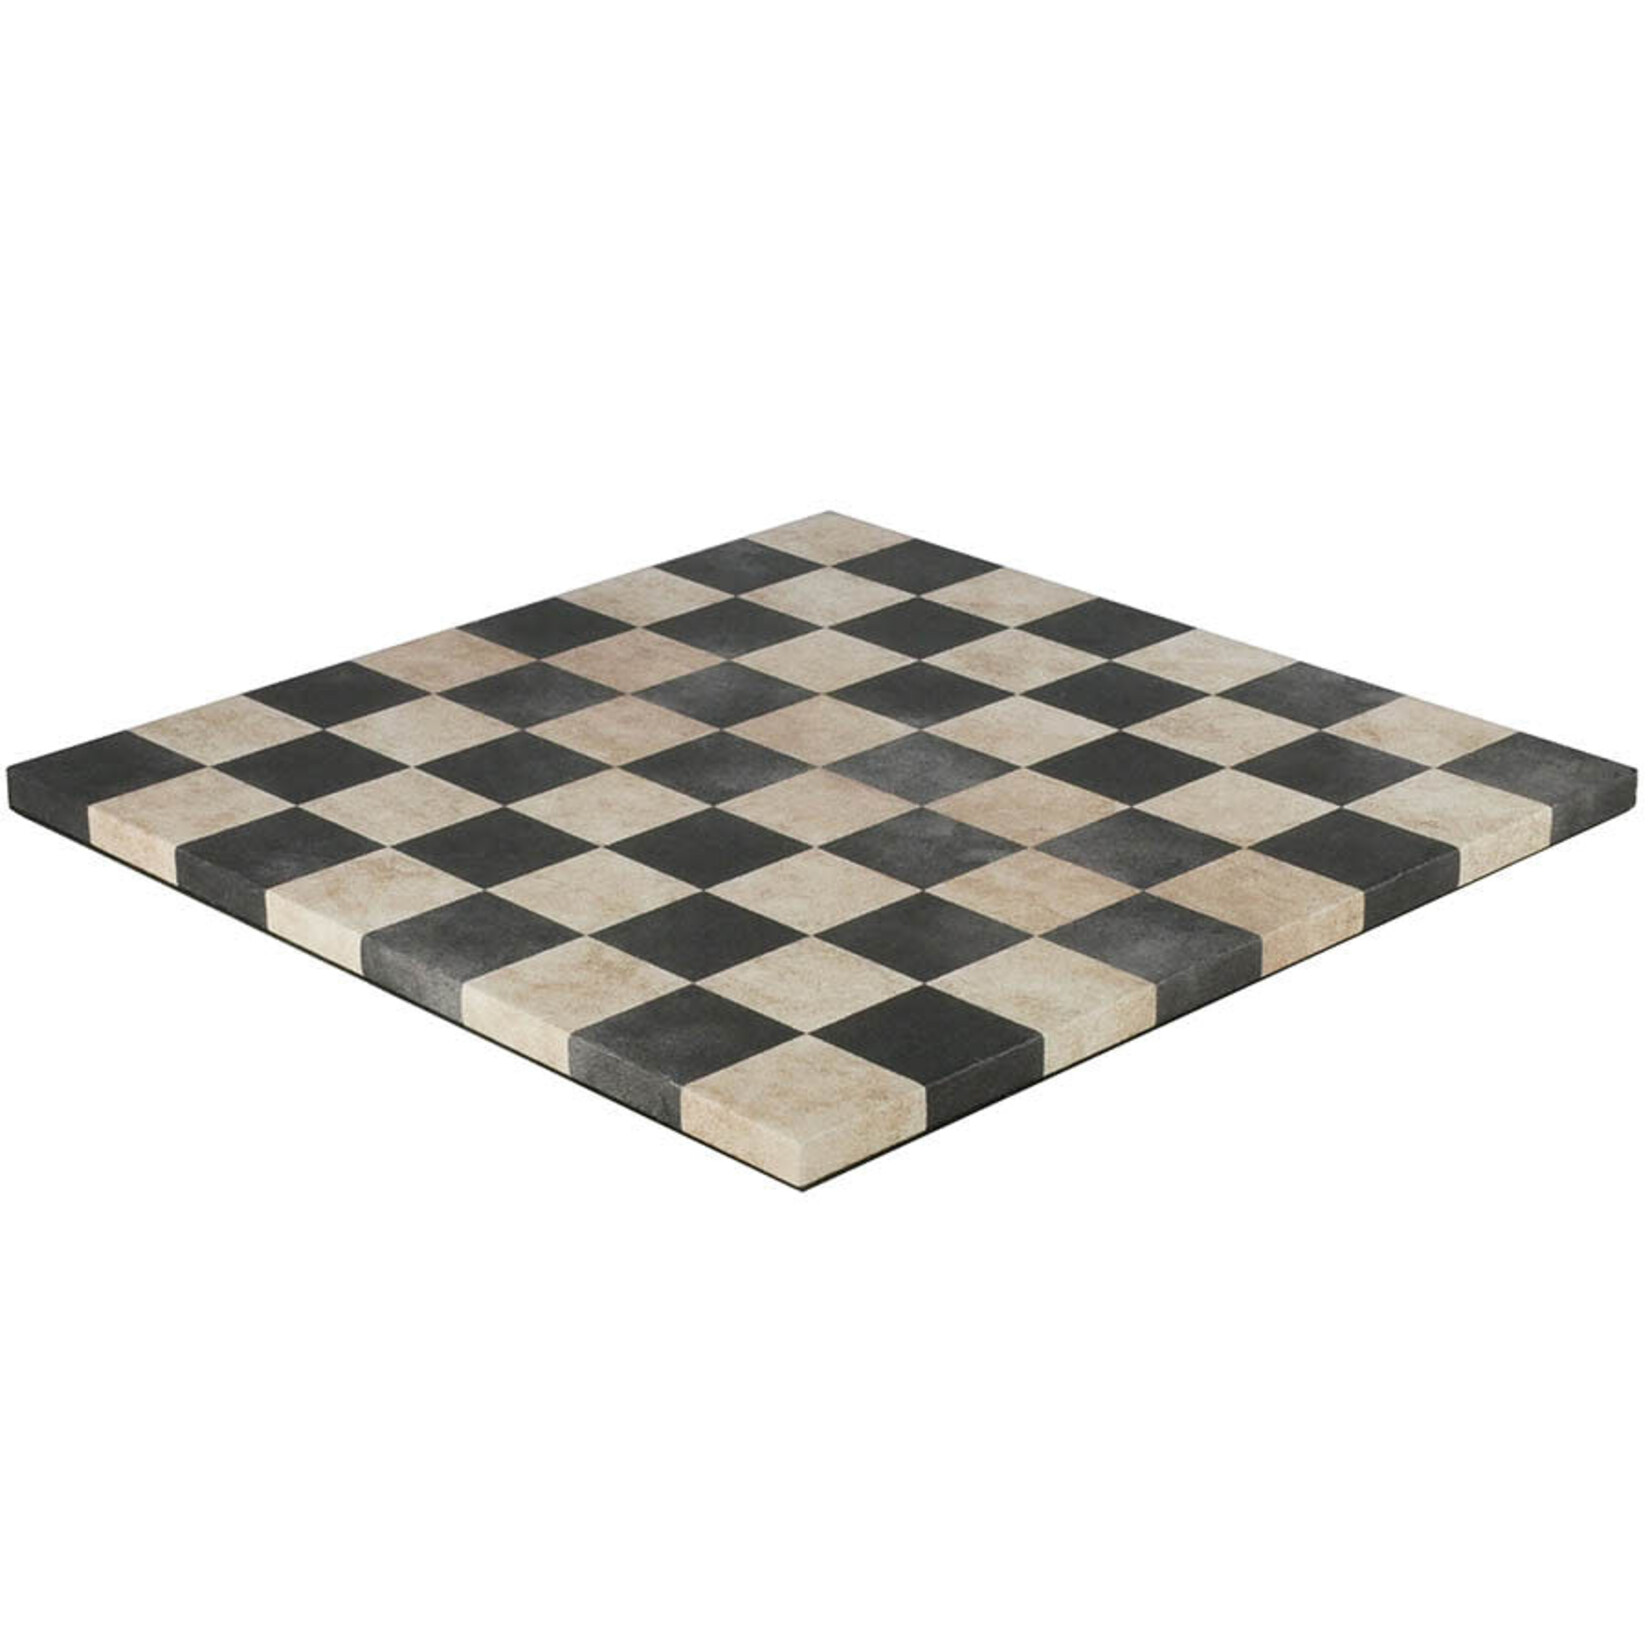 Worldwise Imports 14.5" Leatherette Dusky Black and Cream Chessboard